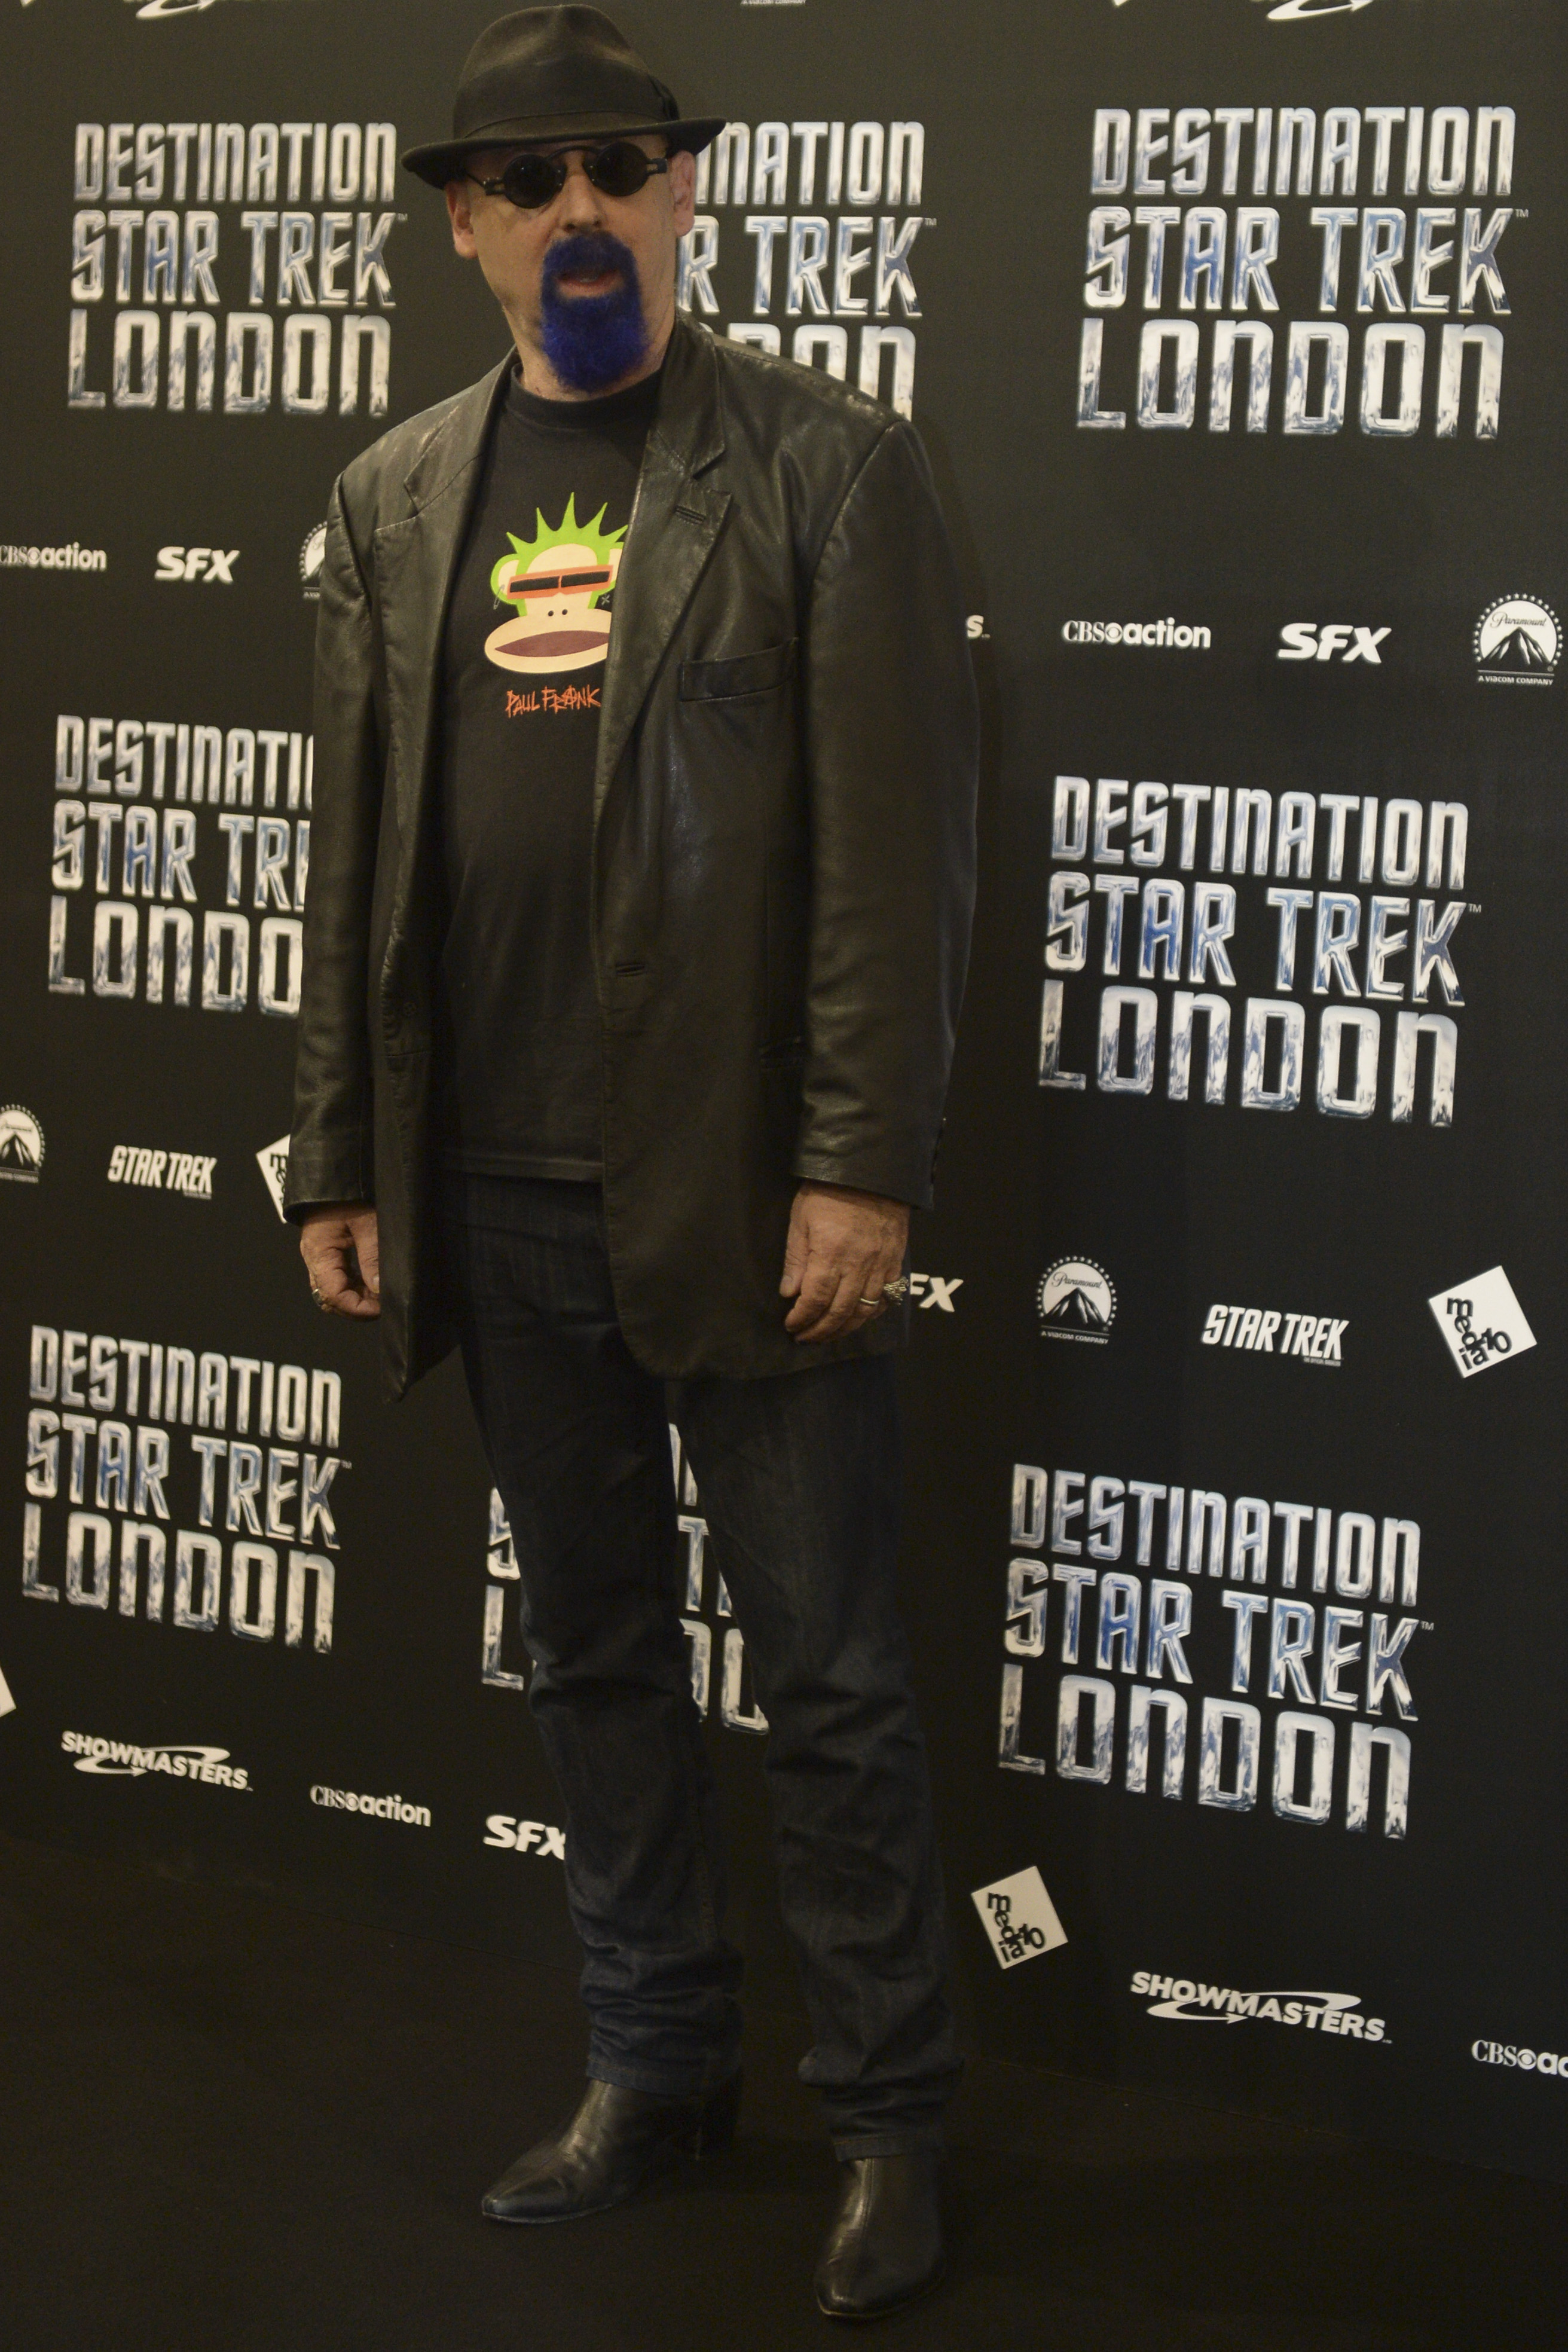 Destination Star Trek London - Photocall